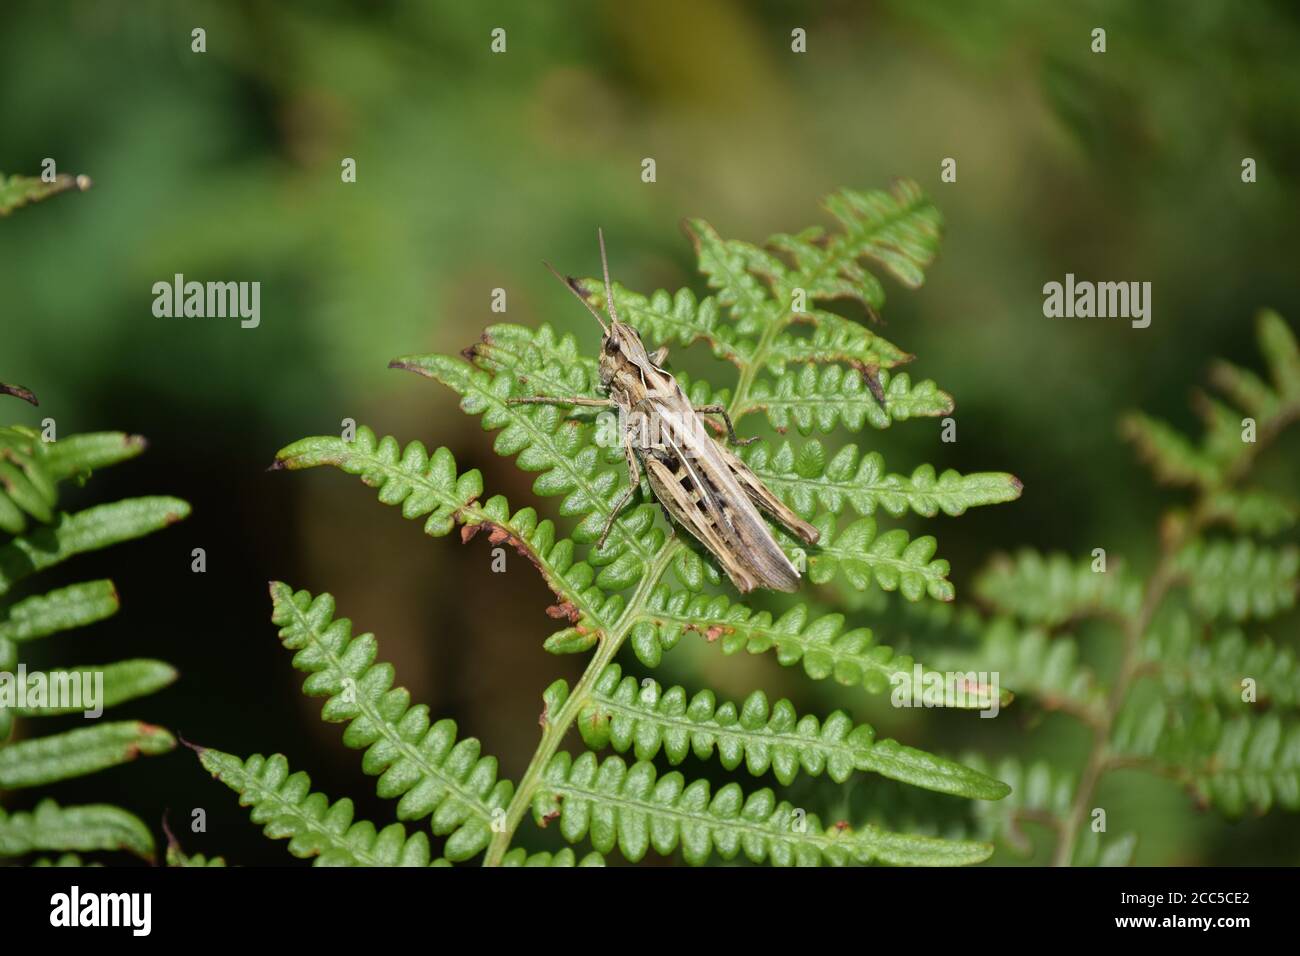 Grasshopper on fern leaf Stock Photo